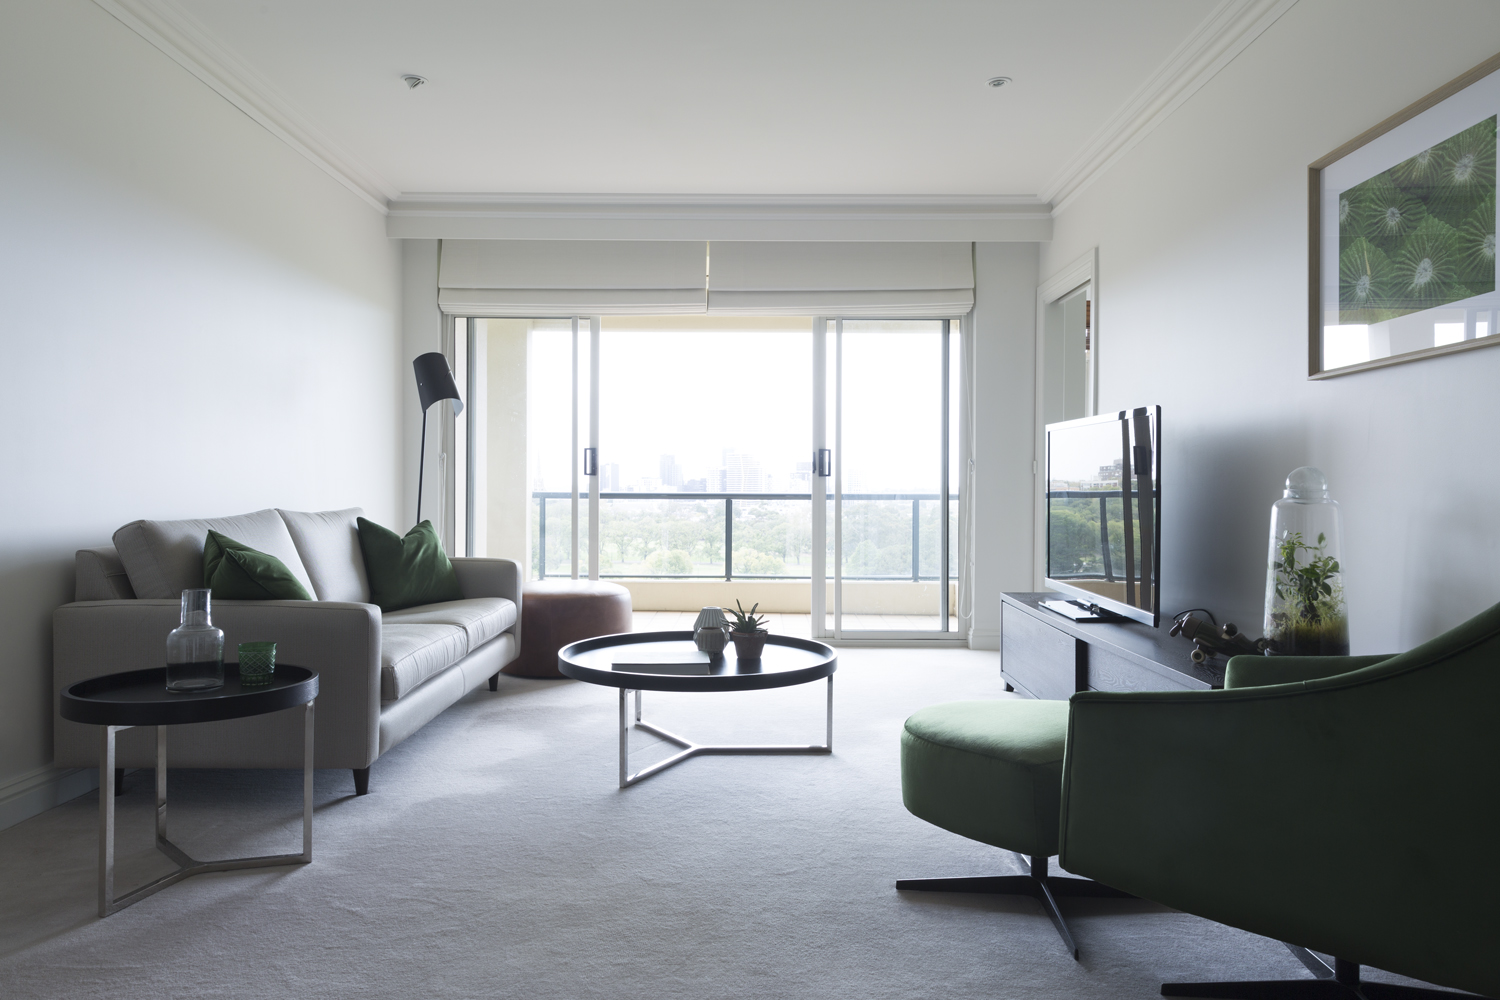 Melbourne apartment living room makeover